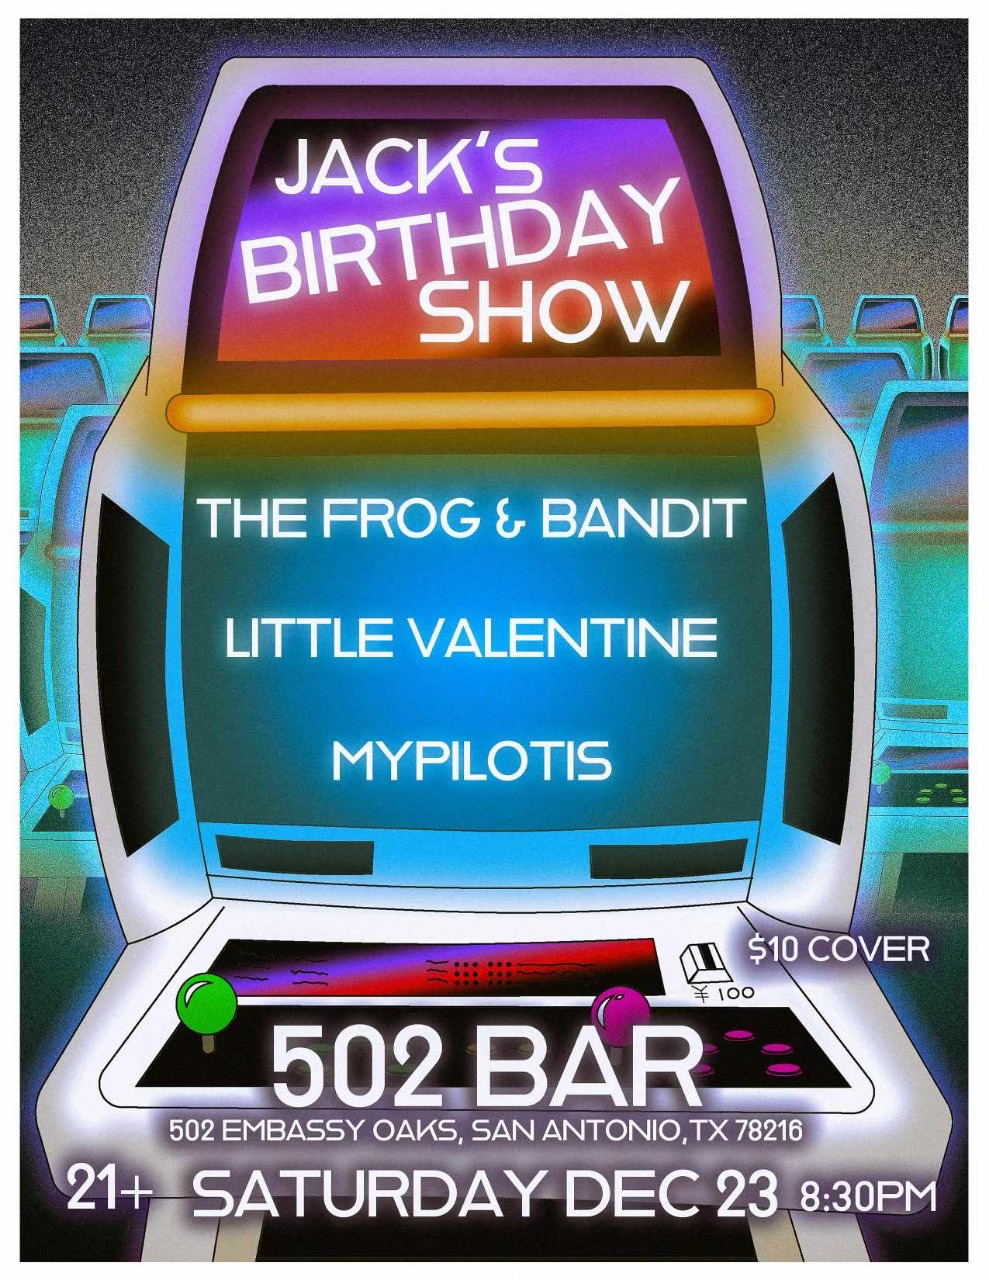 Jack's Birthday Show at 502 Bar